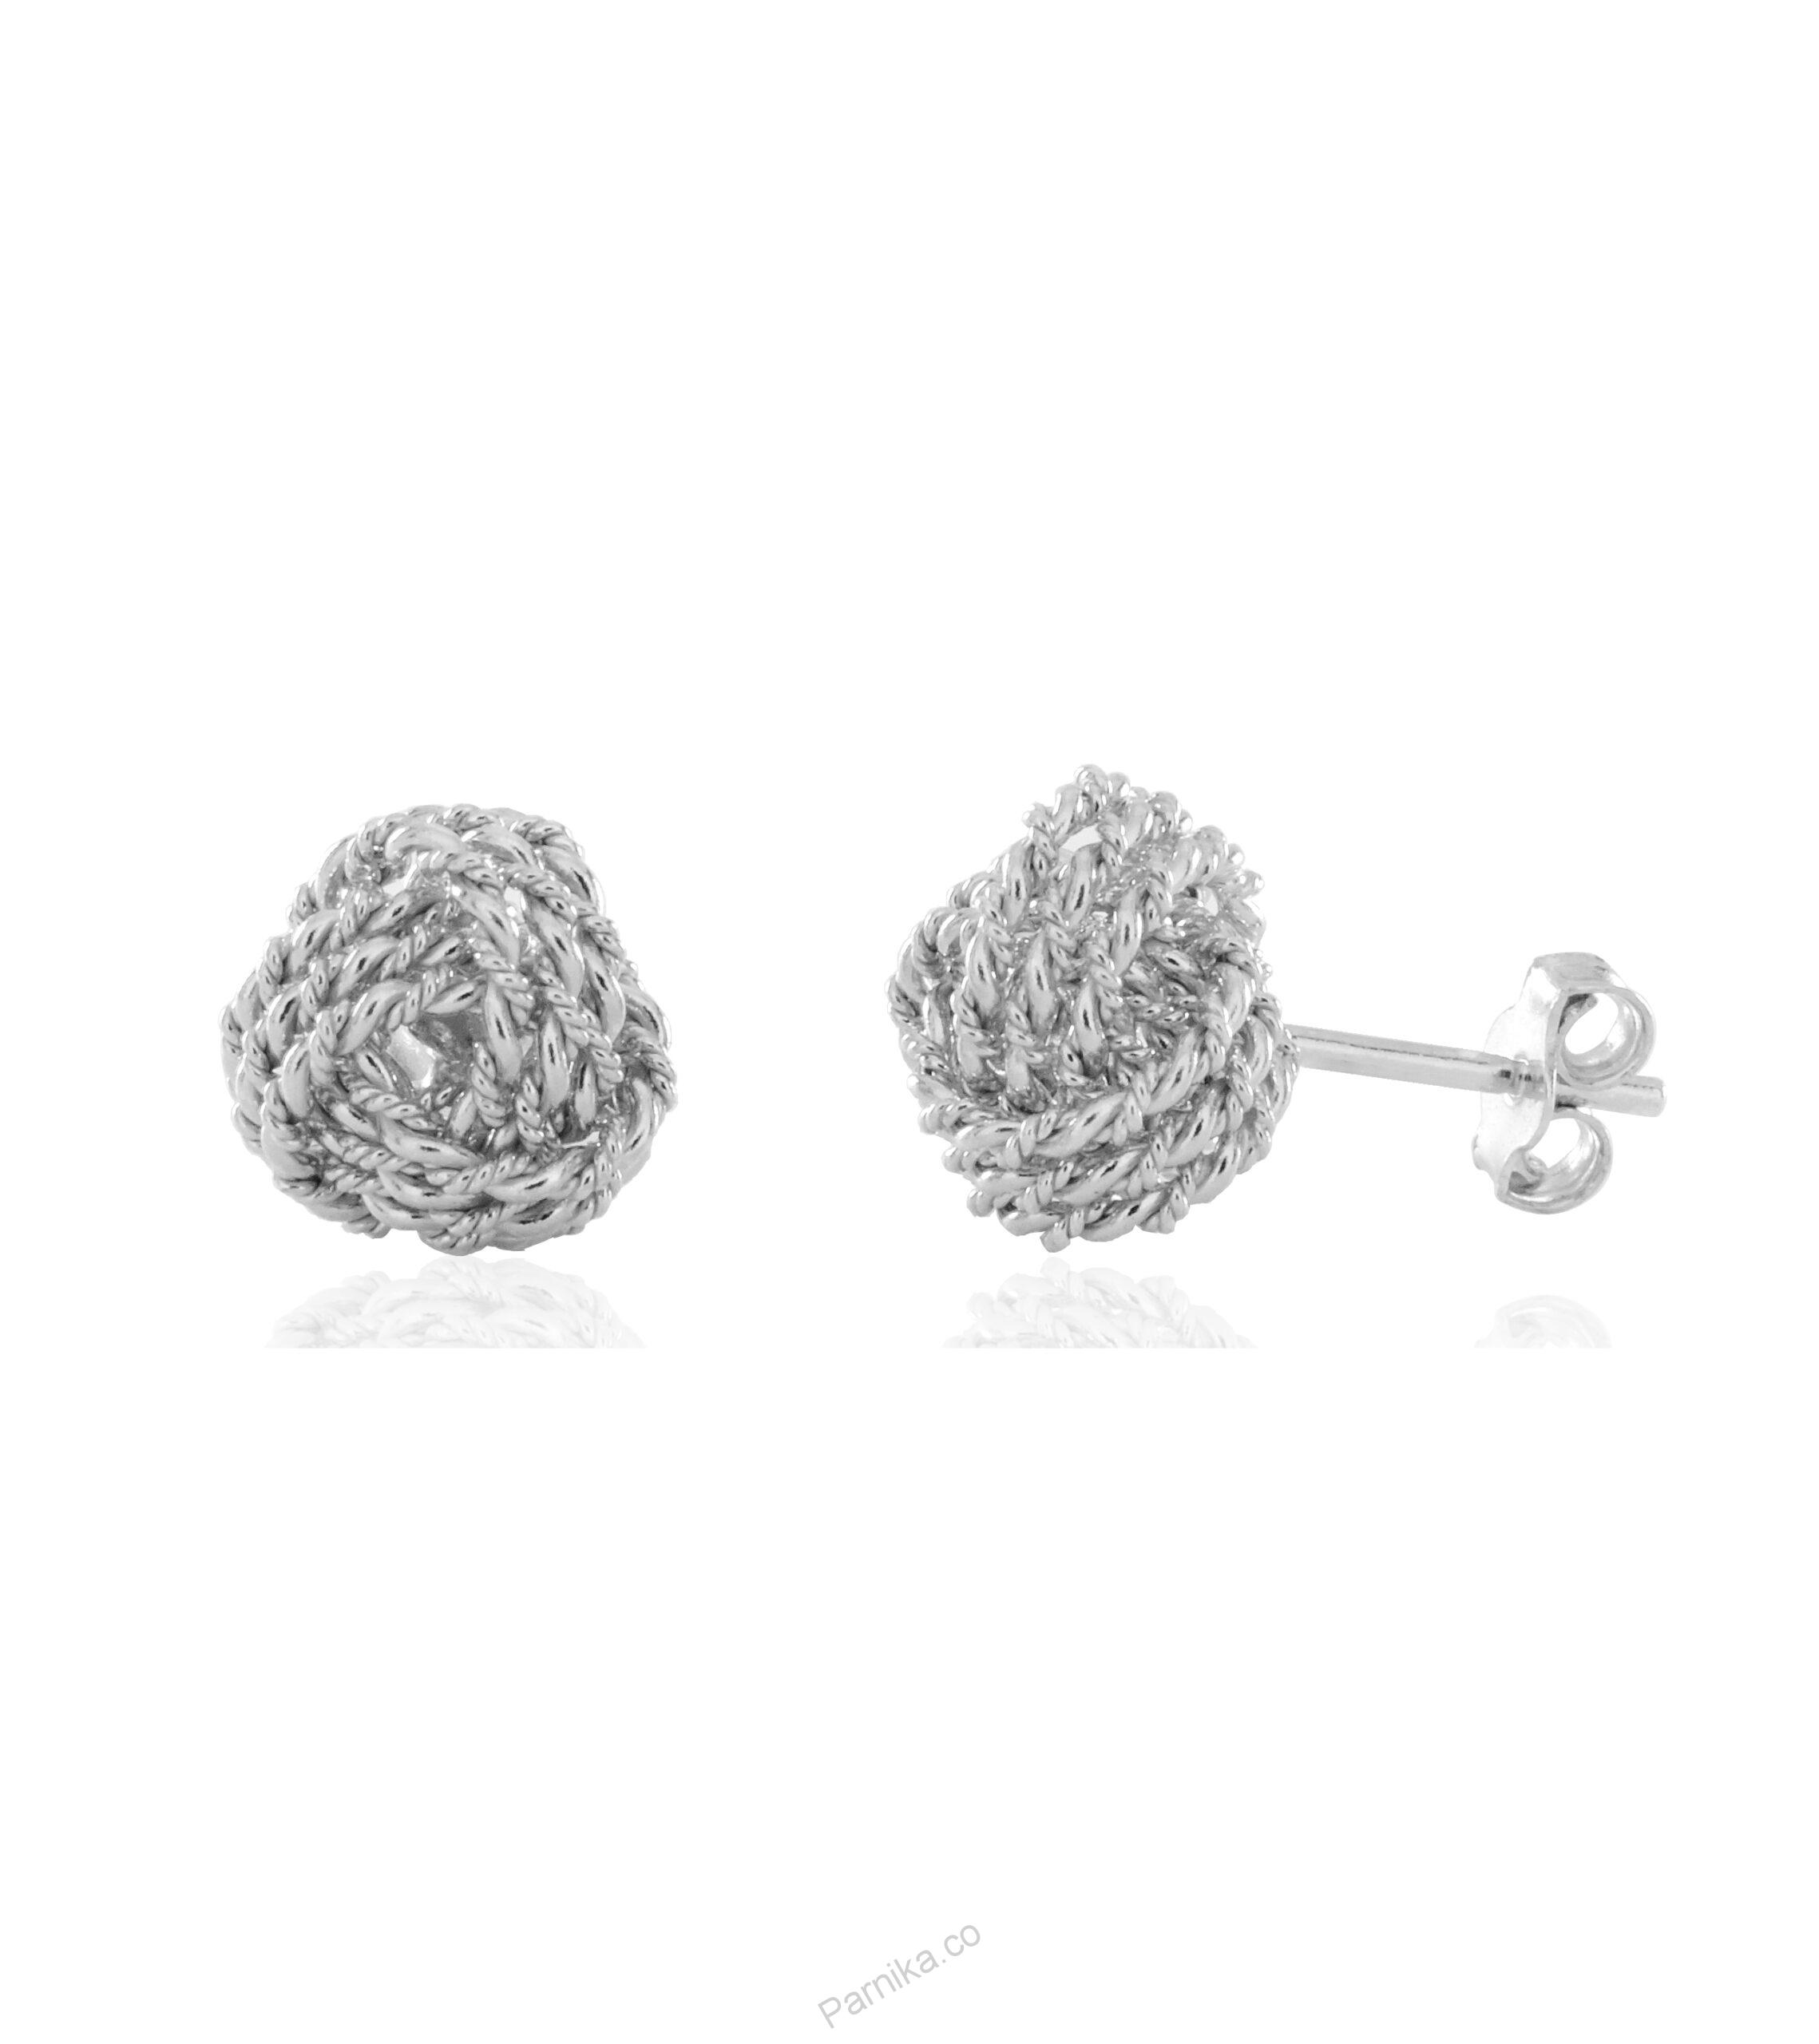 Esprit 925 Sterling Silver Heart Earrings With Glass Decorations/Love/ Earrings | eBay